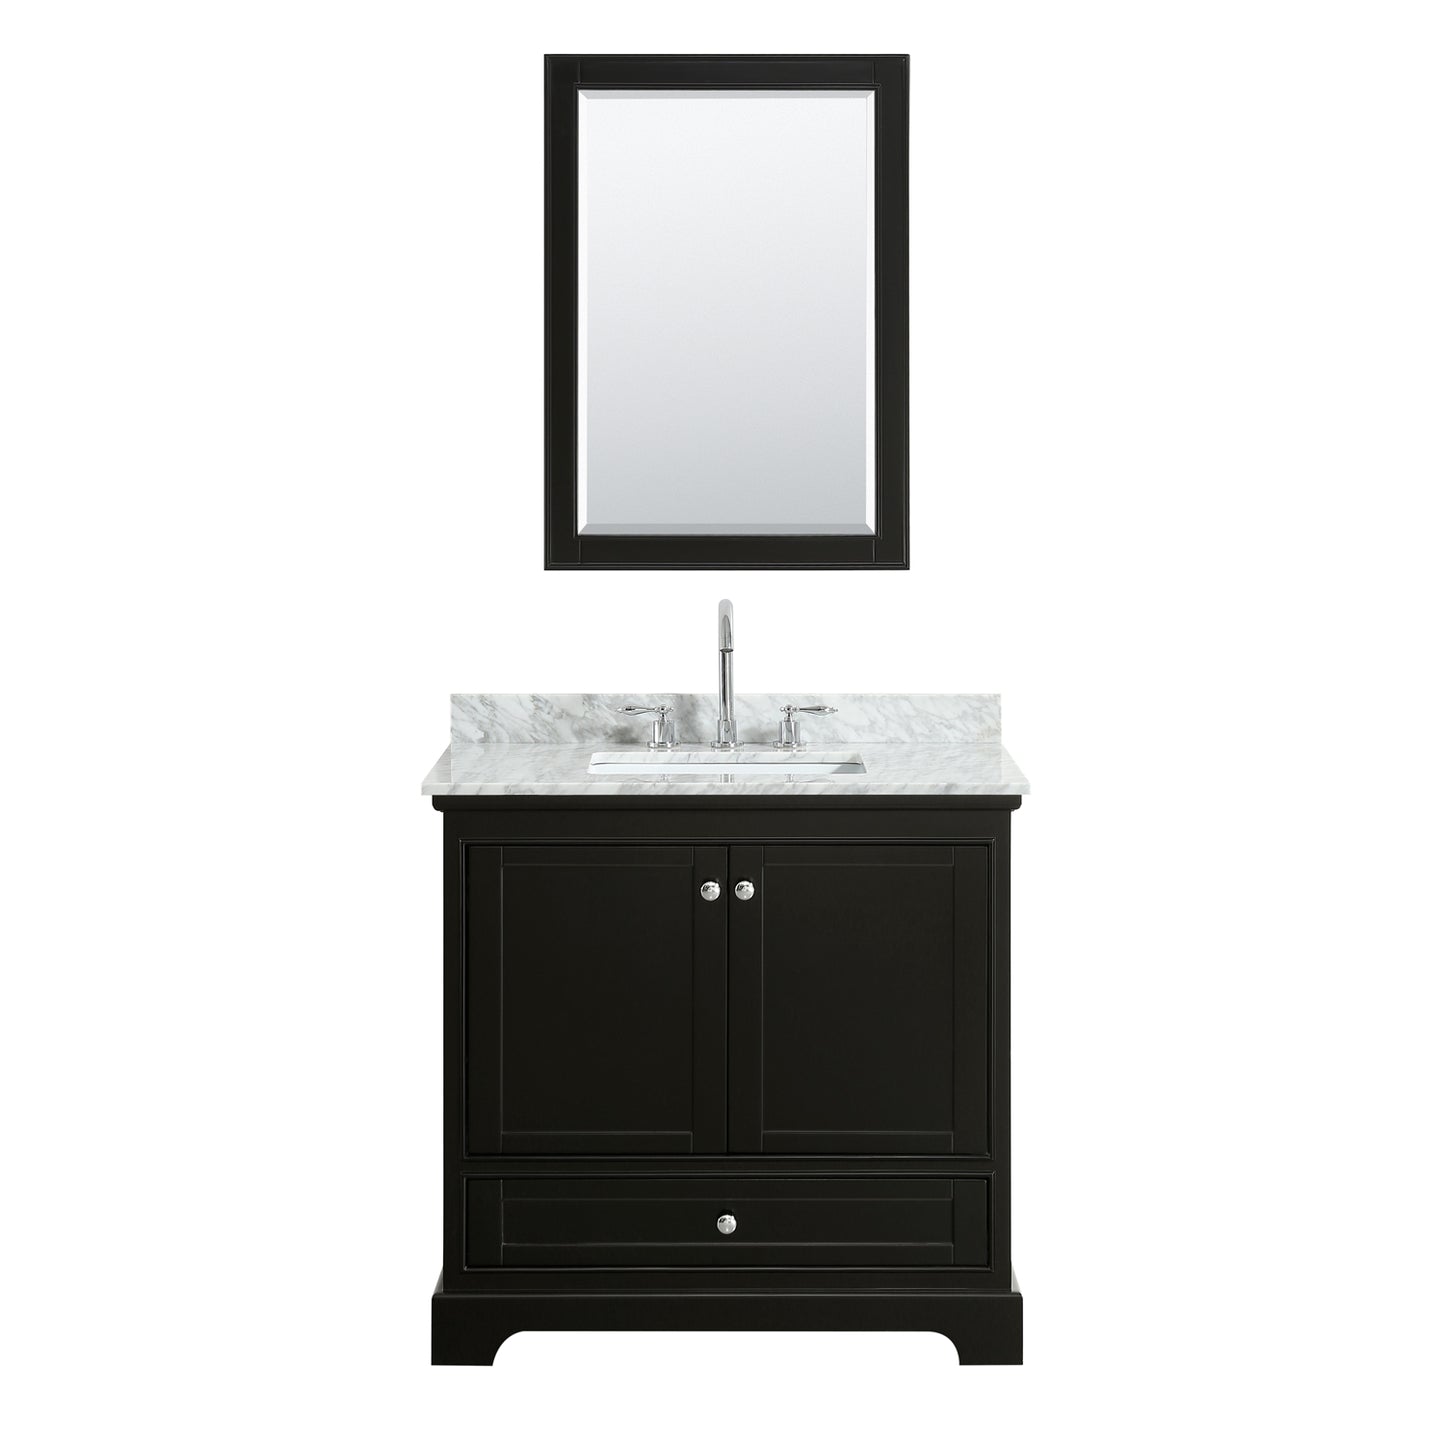 36 Inch Single Bathroom Vanity, White Carrara Marble Countertop, Undermount Square Sink, and 24 Inch Mirror - Luxe Bathroom Vanities Luxury Bathroom Fixtures Bathroom Furniture